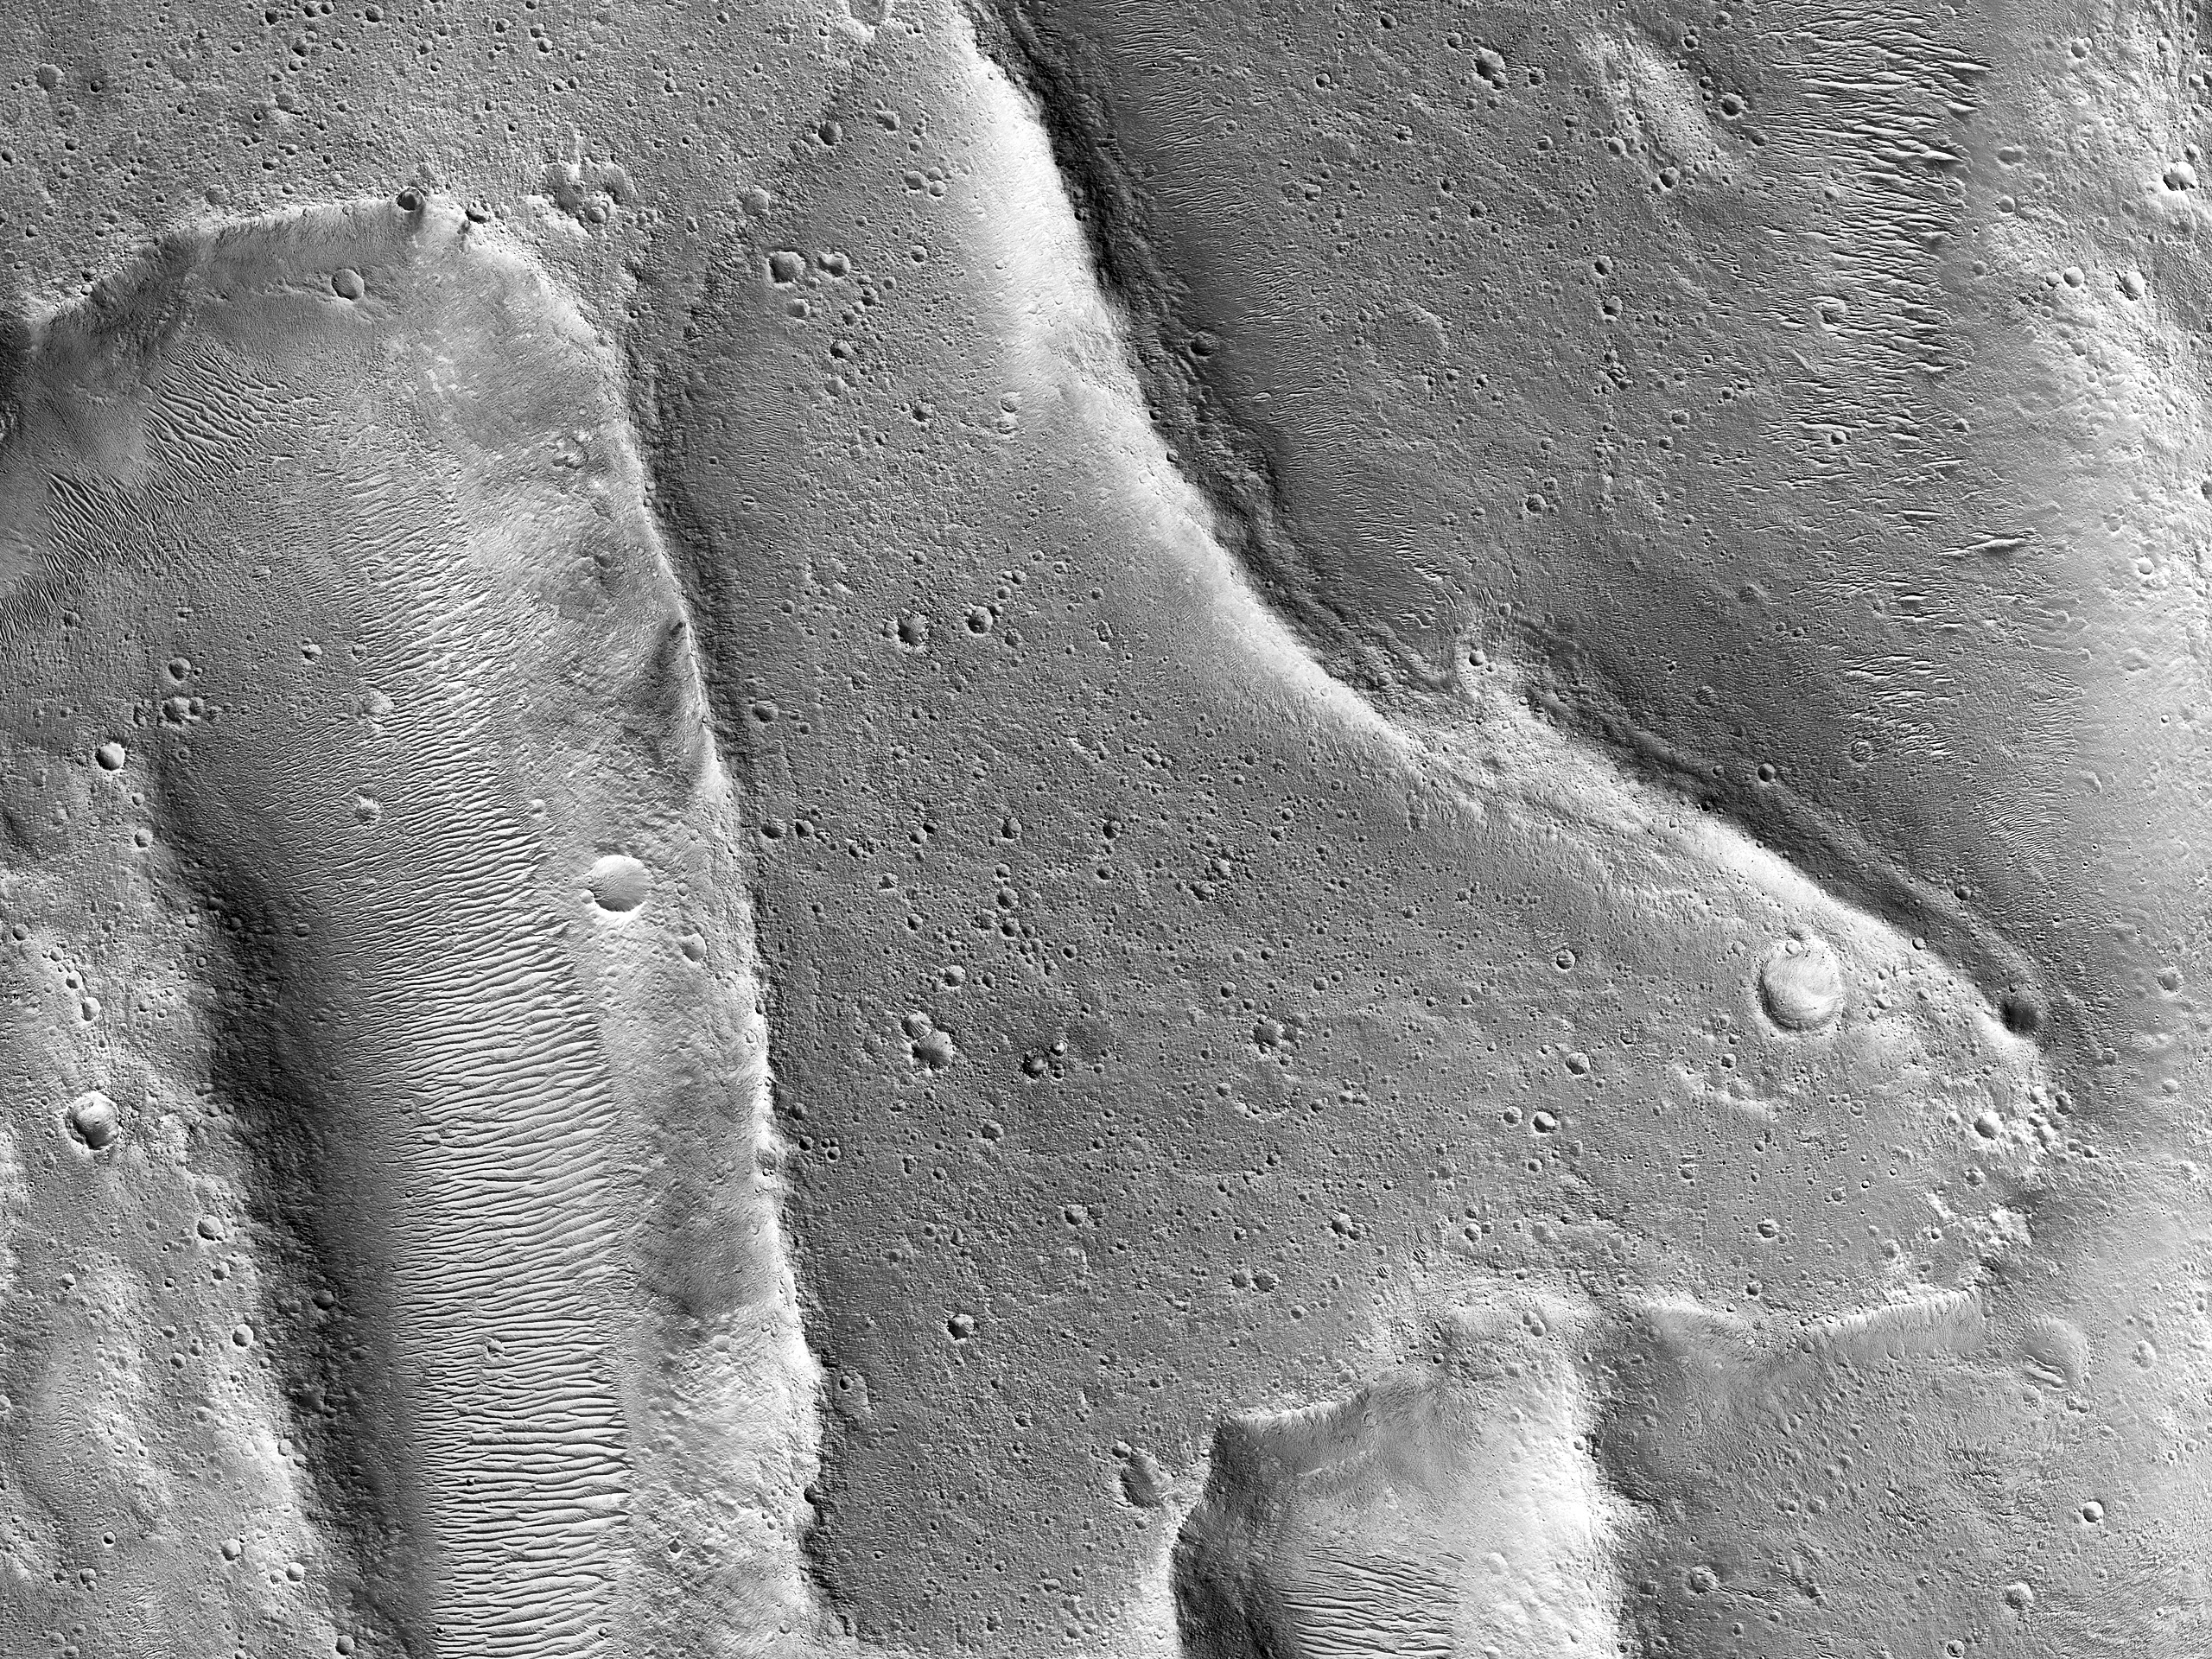 Landforms in Ares Vallis